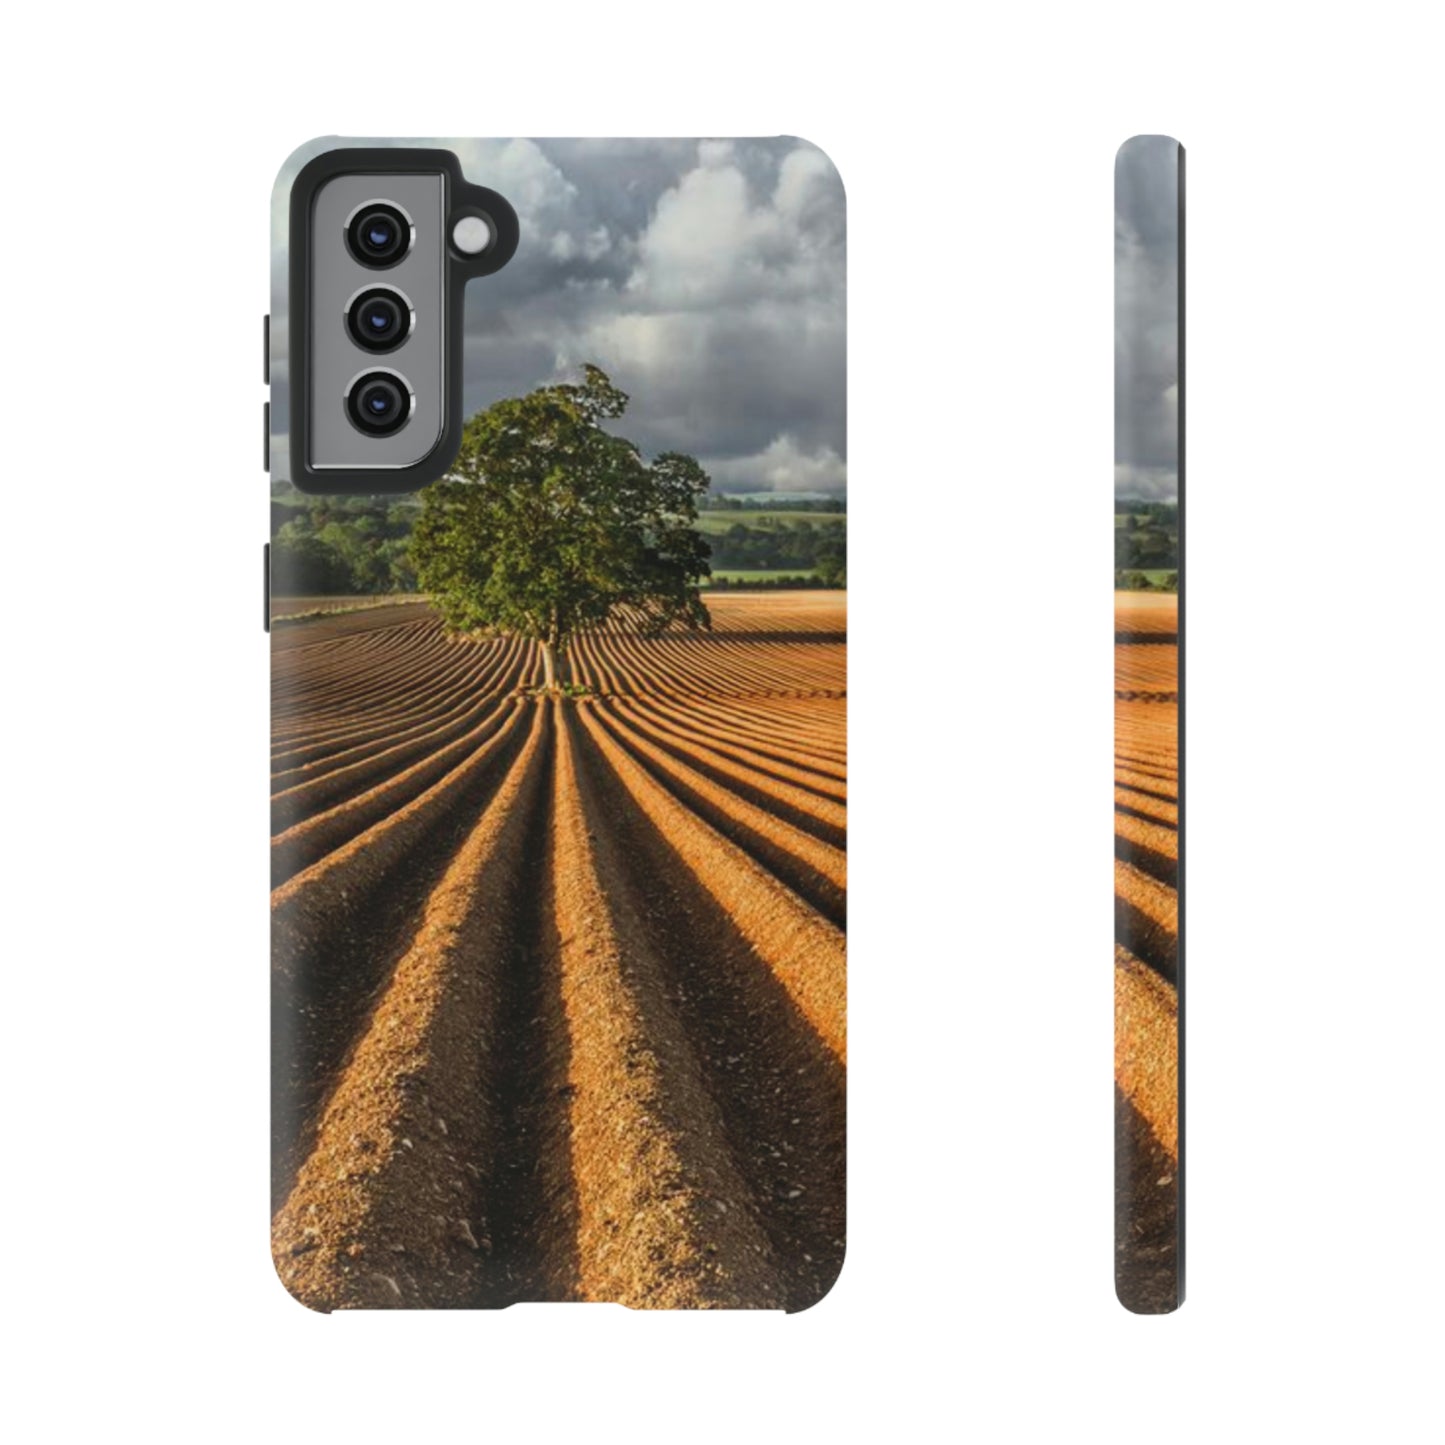 Living Farm - Samsung